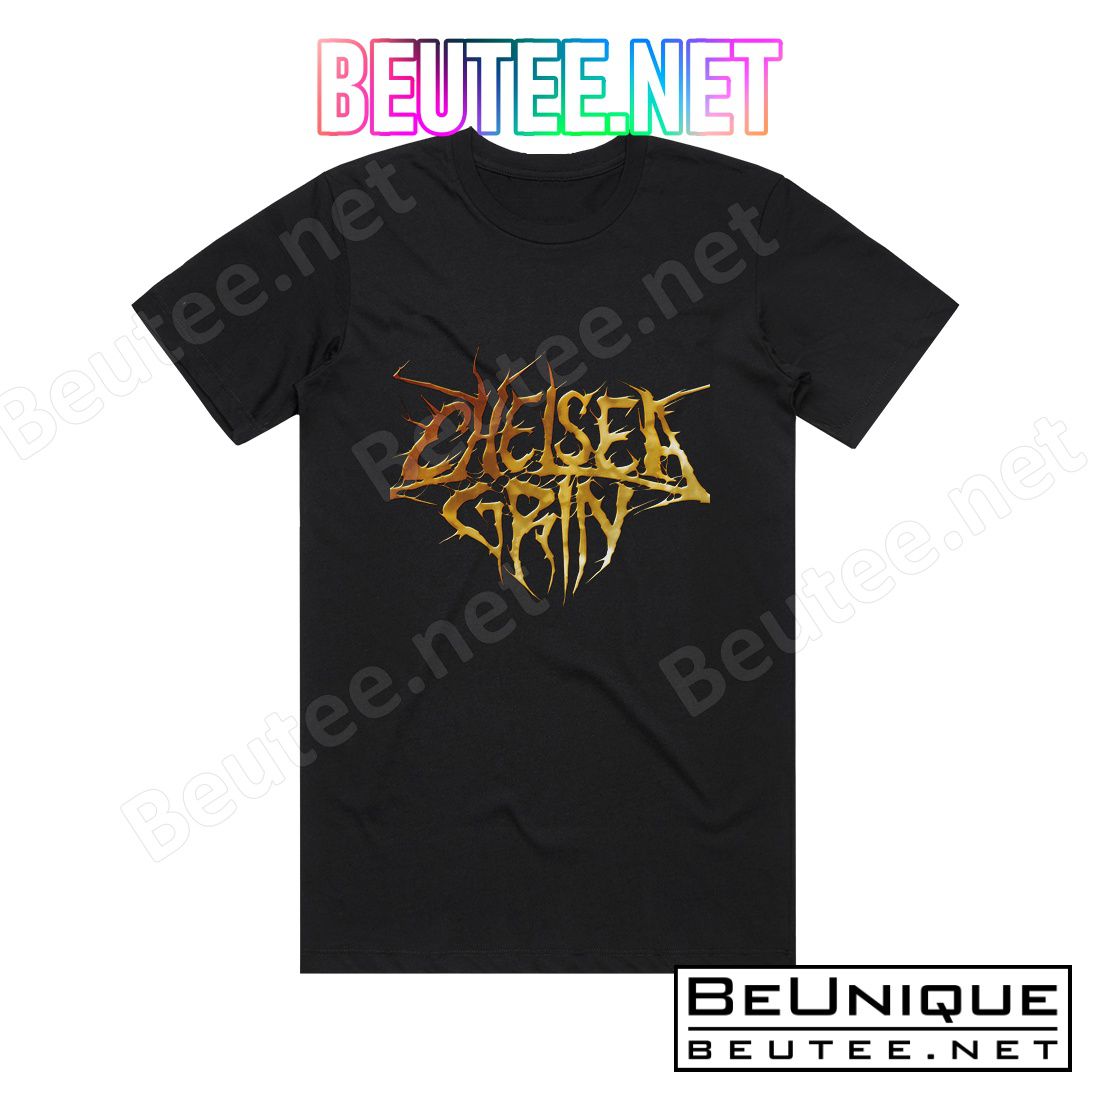 Chelsea Grin Desolation Of Eden 2 Album Cover T-Shirt